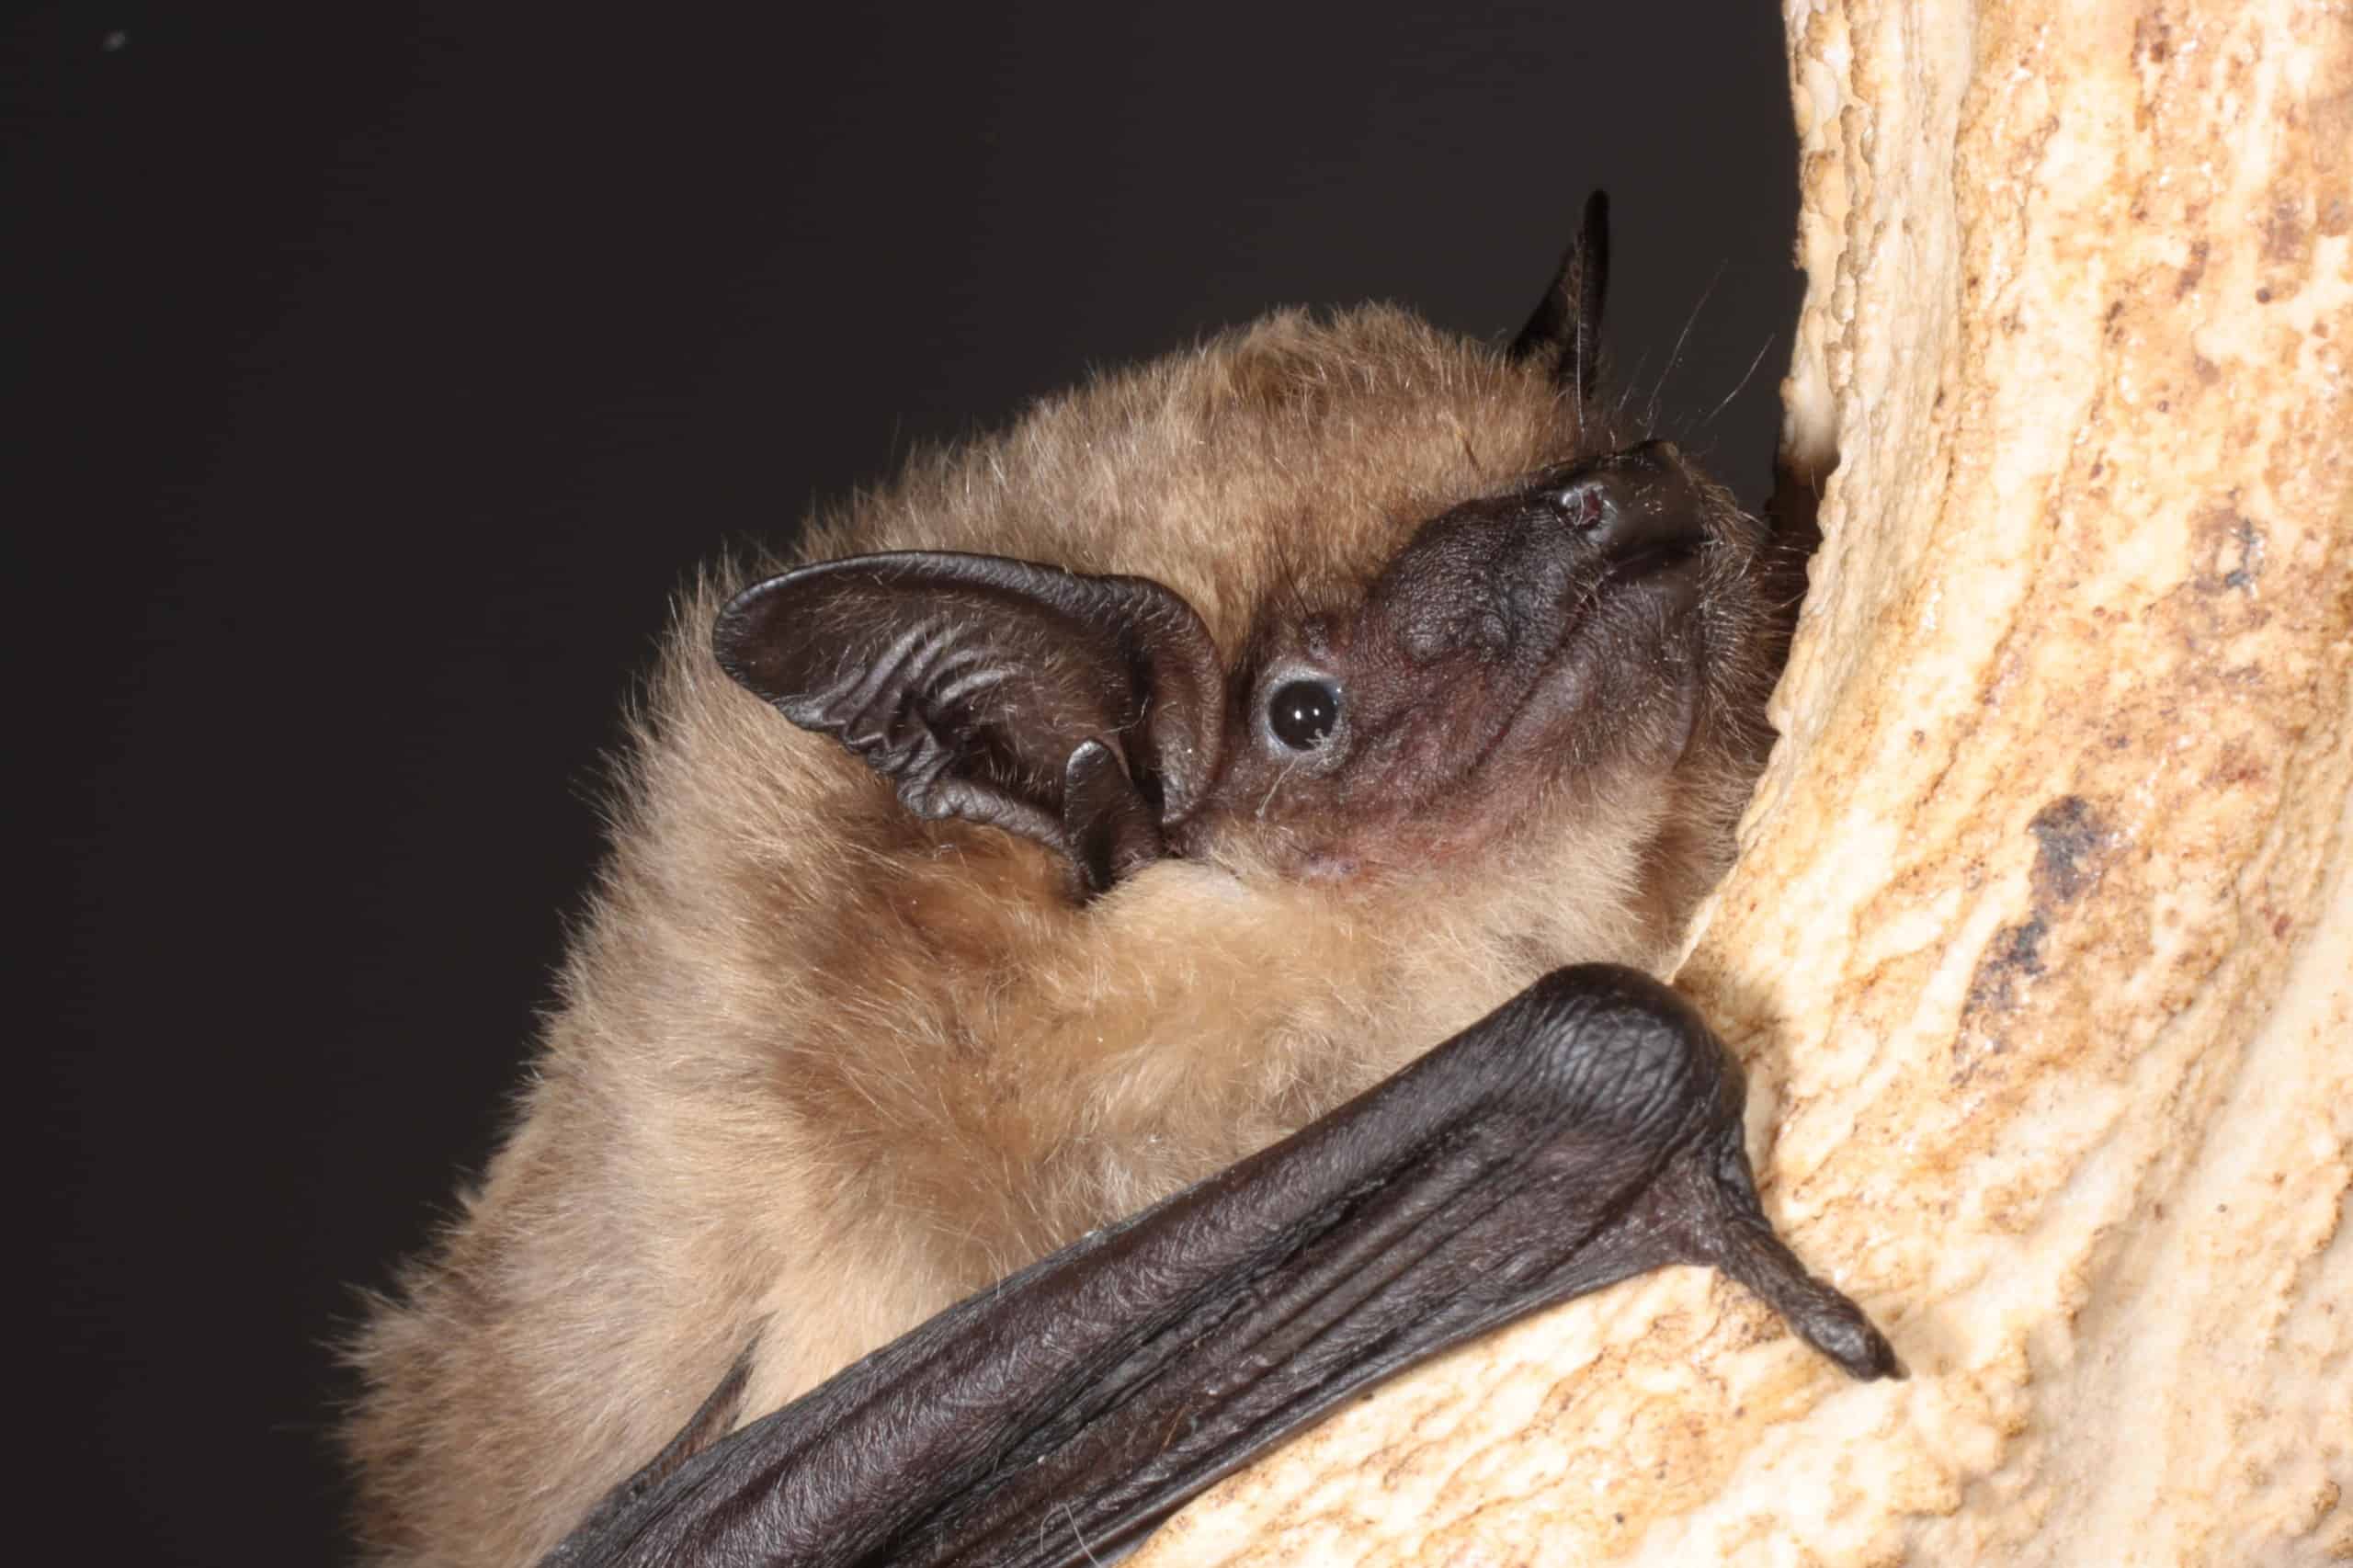 The serotine bat